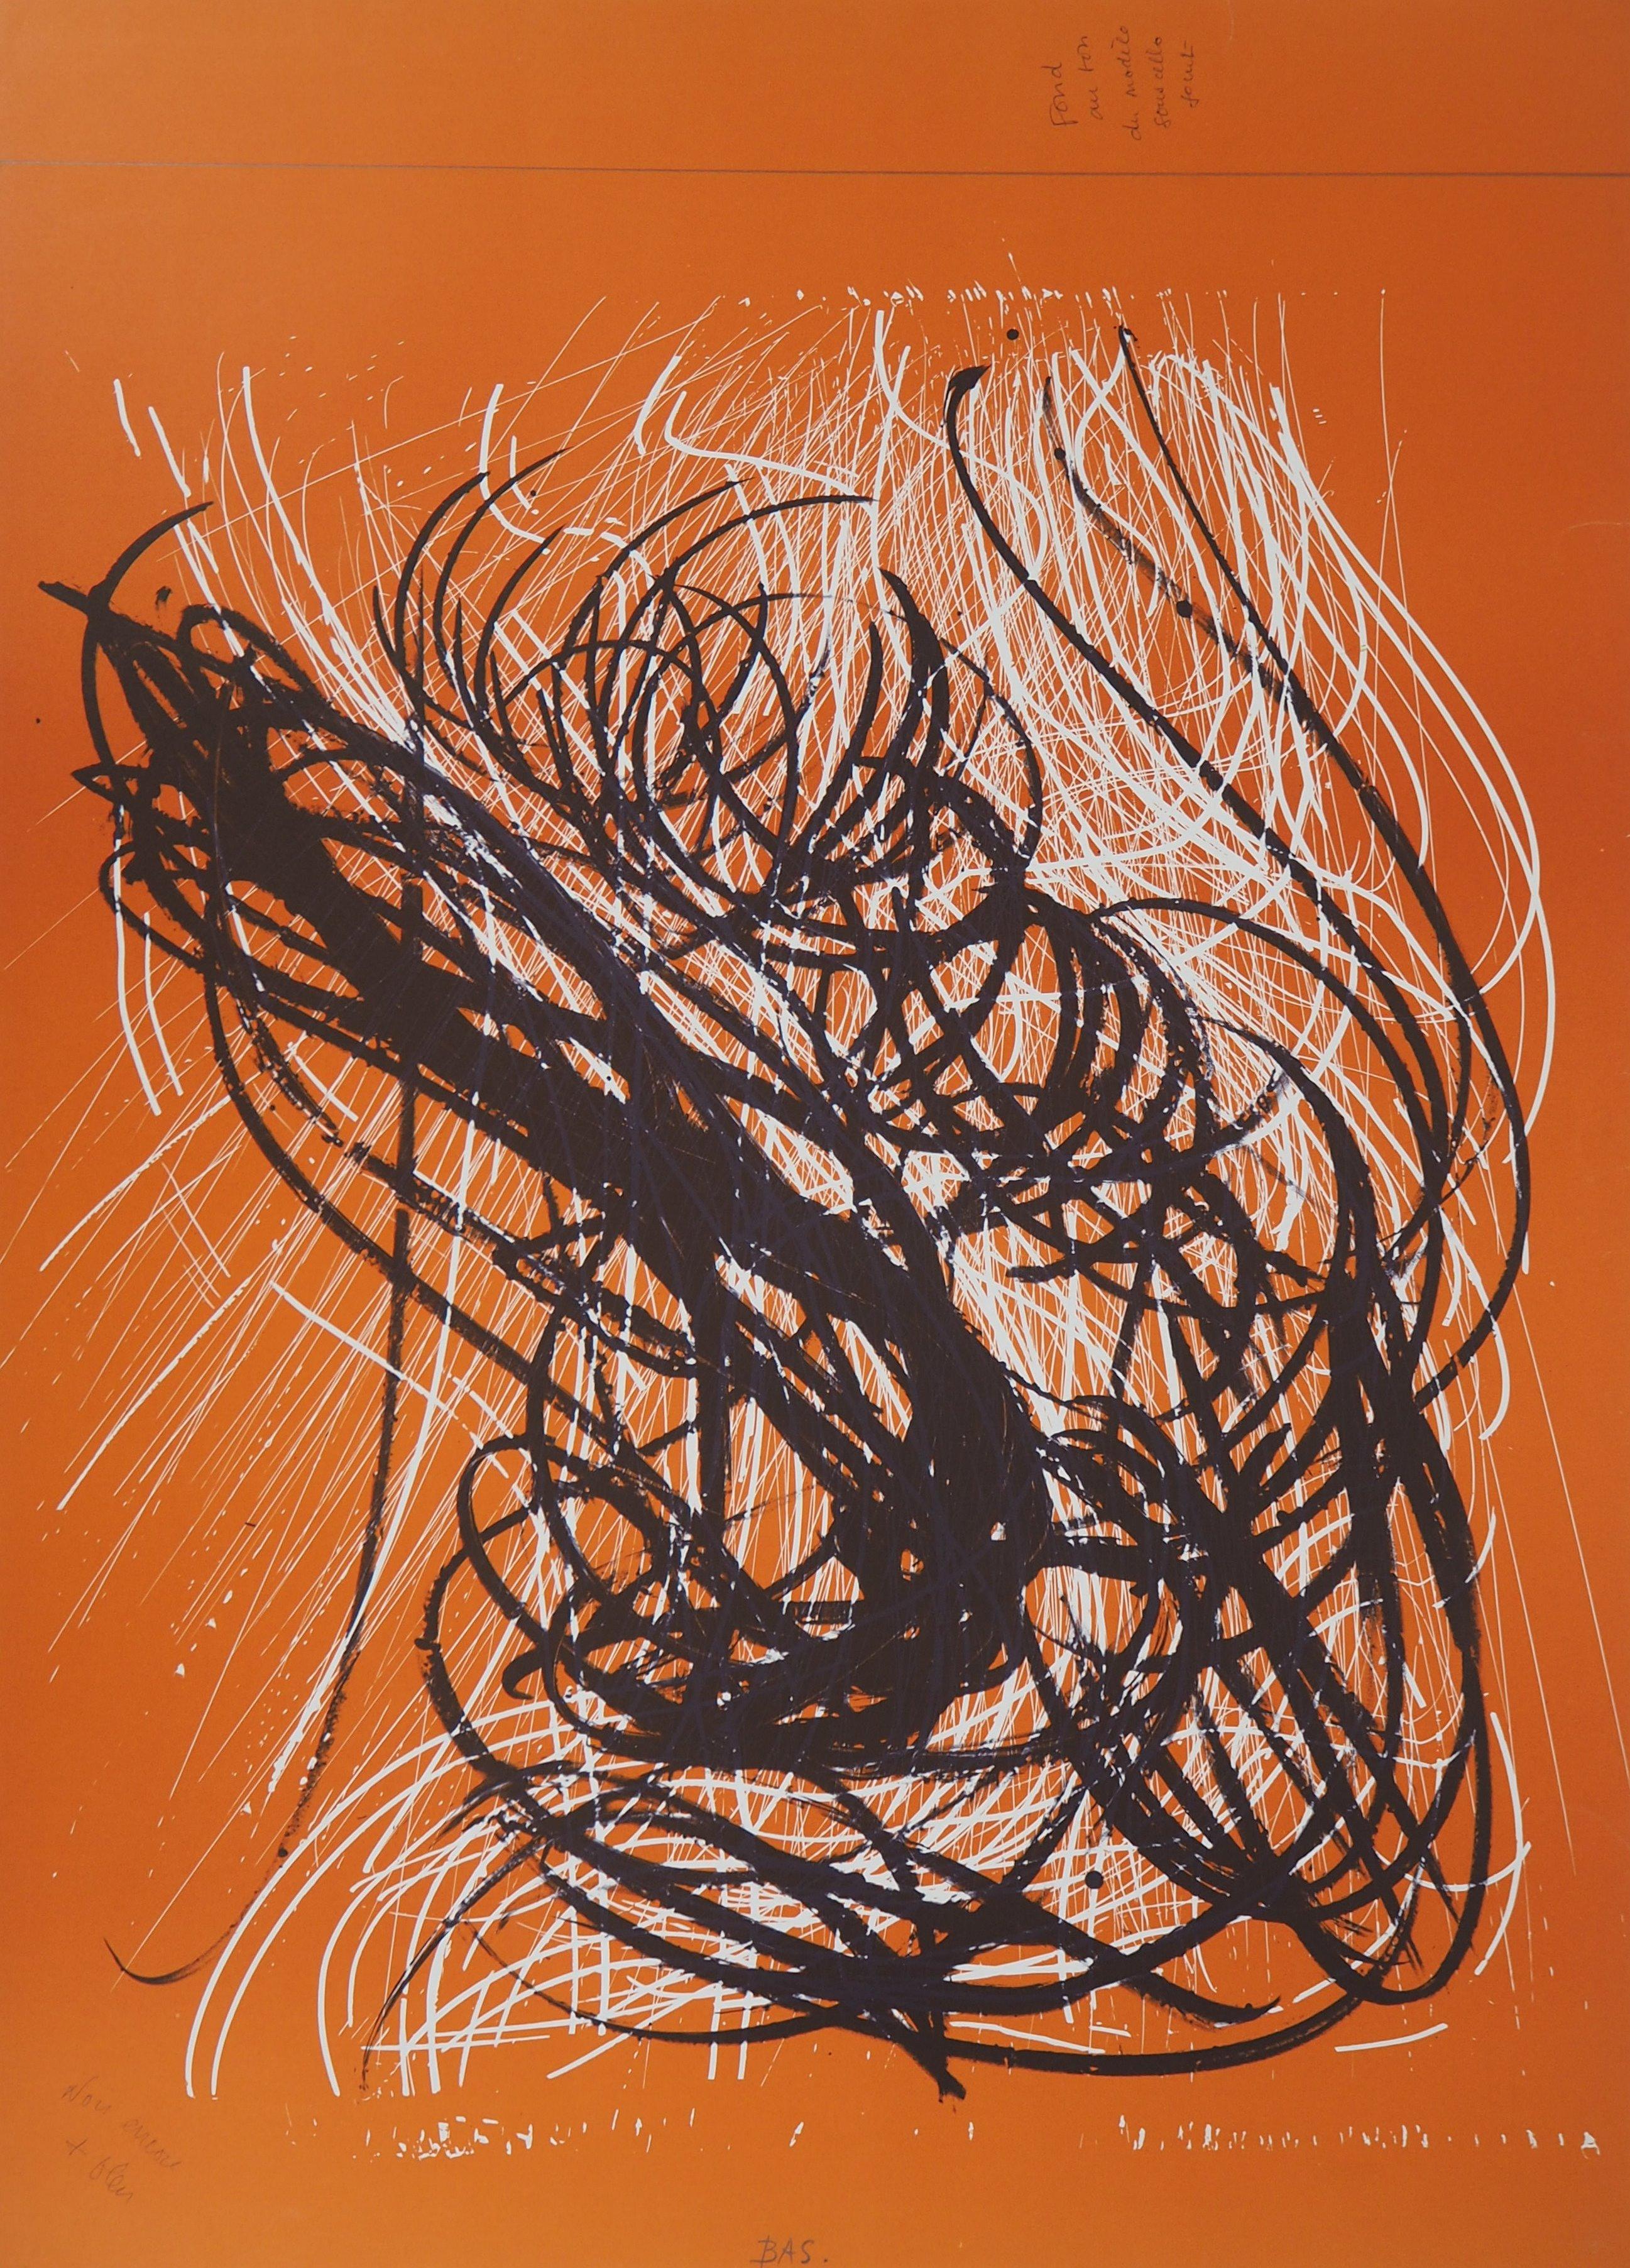 Hans Hartung Abstract Print - S Orange Abstract Composition - Original Lithograph, 1971